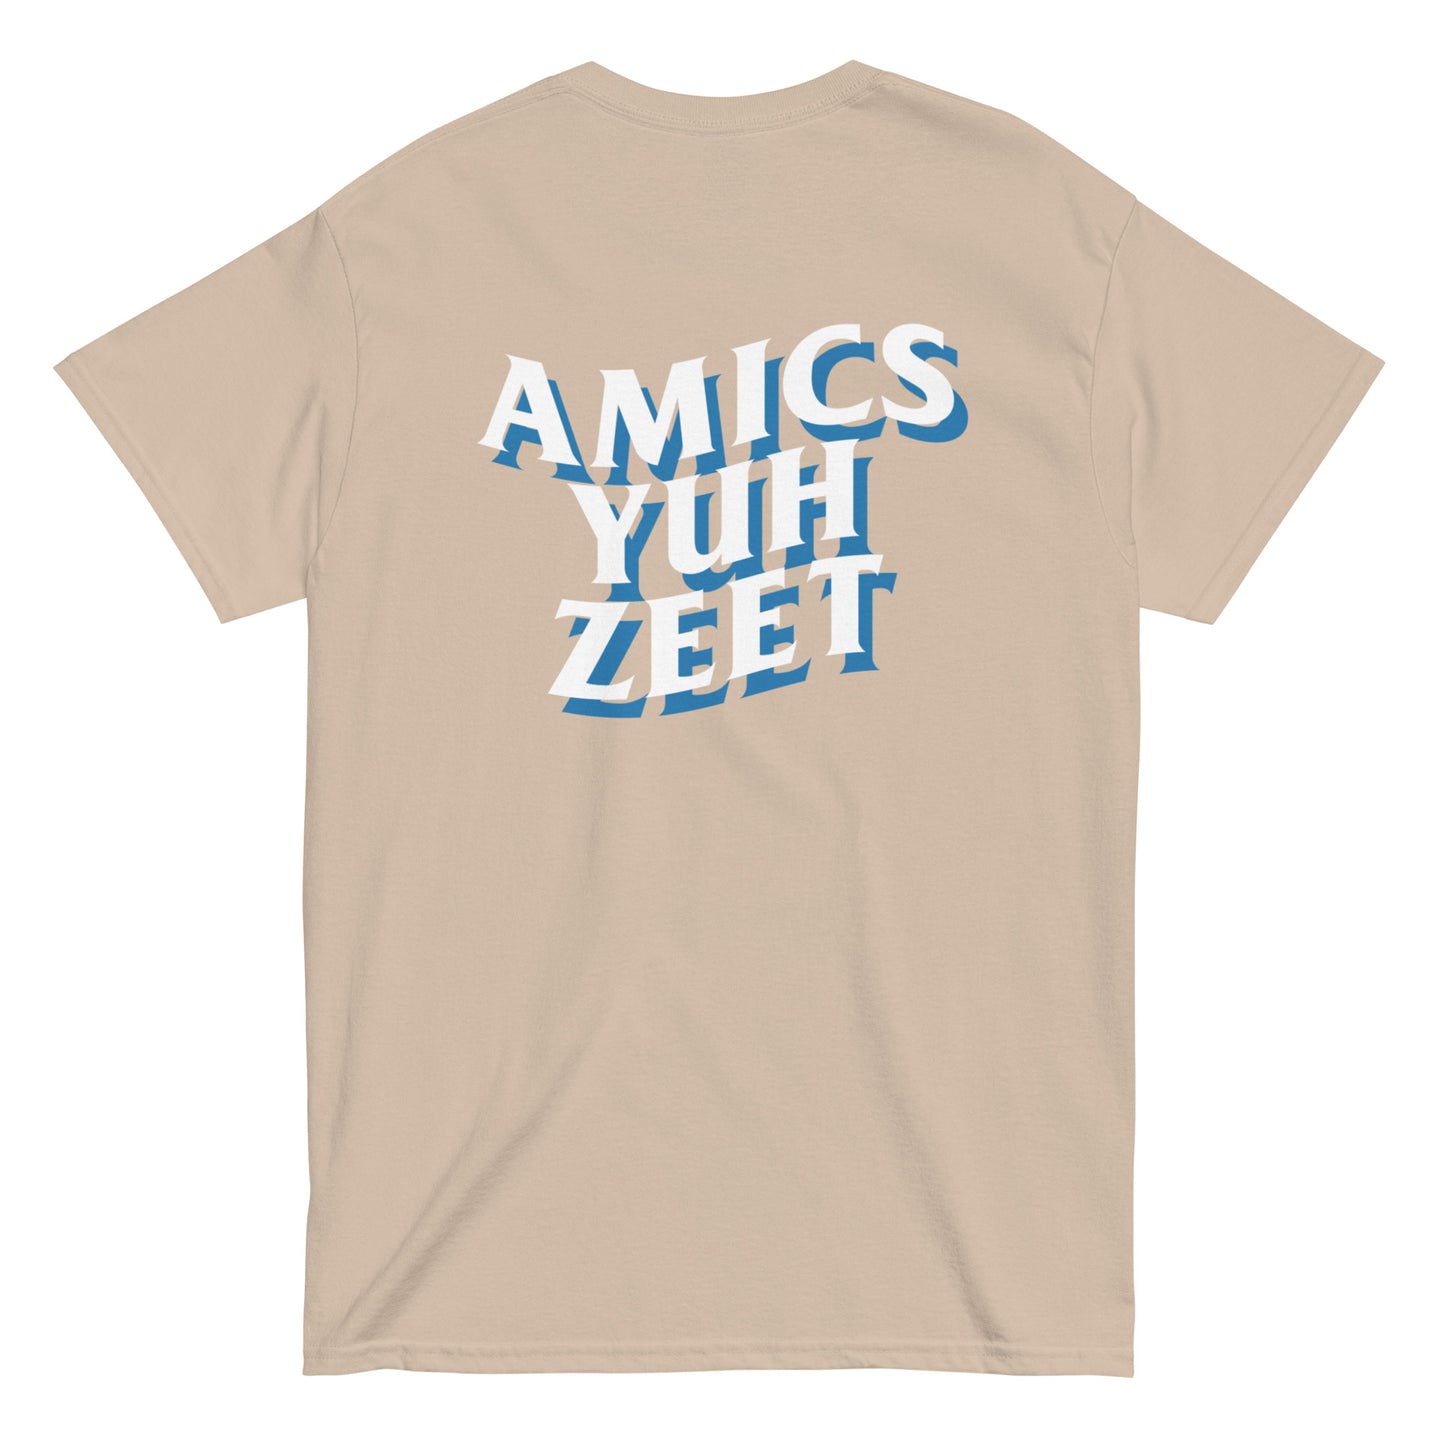 AMICS YUH ZEET Shirt